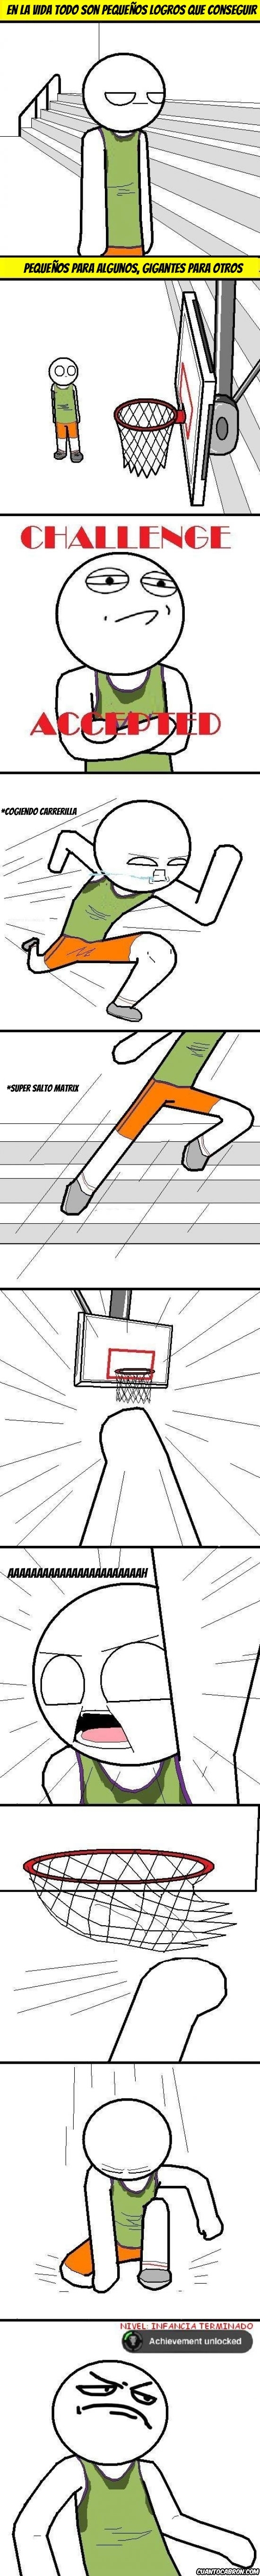 baloncesto,basket,basquet,canasta,infancia terminada,logro desbloqueado,red,saltar,tocar